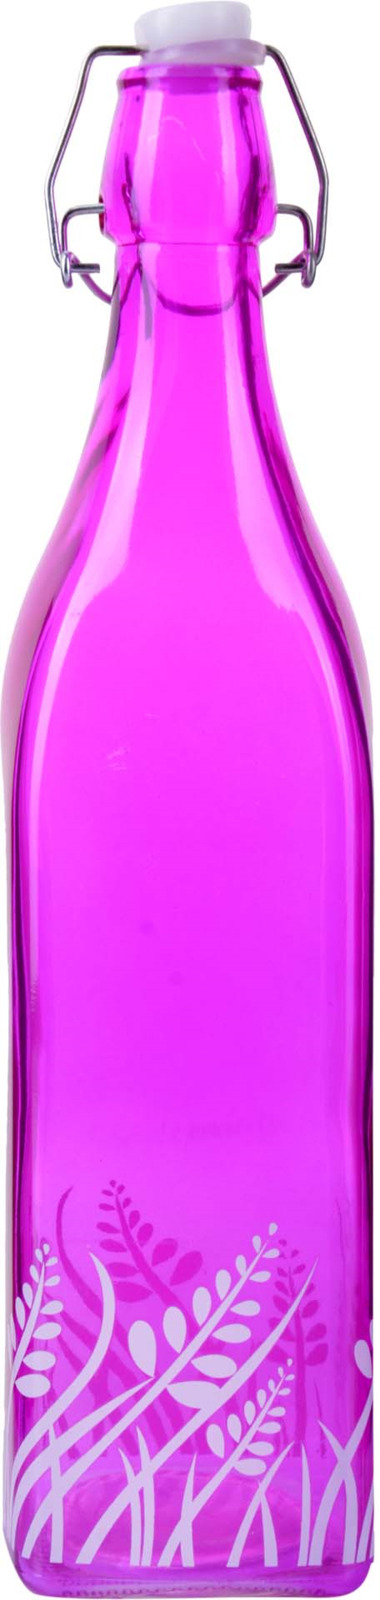 фото Бутылка Loraine, цвет: фиолетовый, 1 л